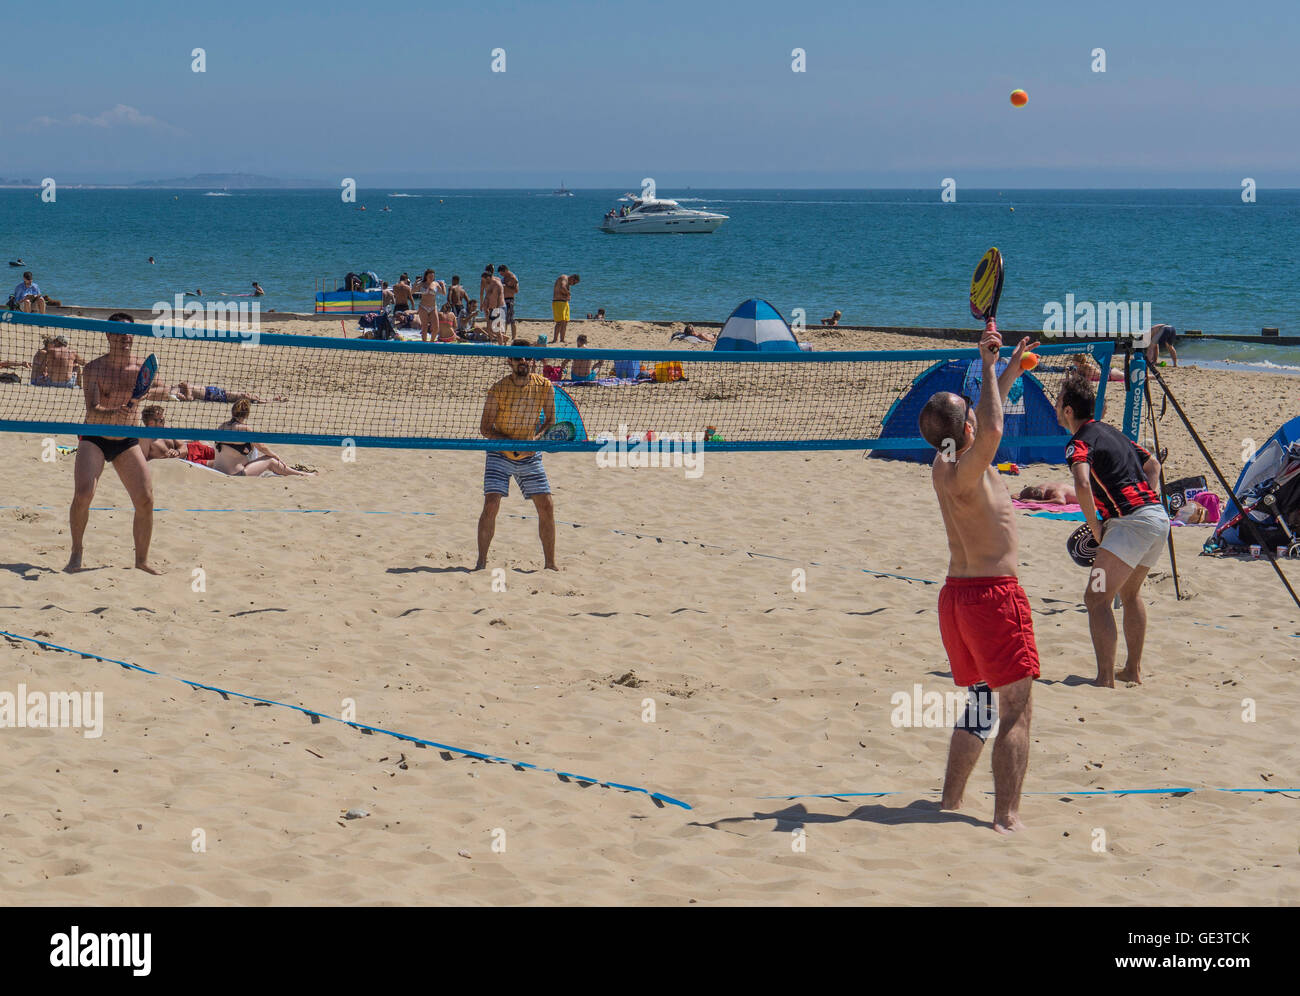 People playing beach tennis at Bournemouth, UK Stock Photo